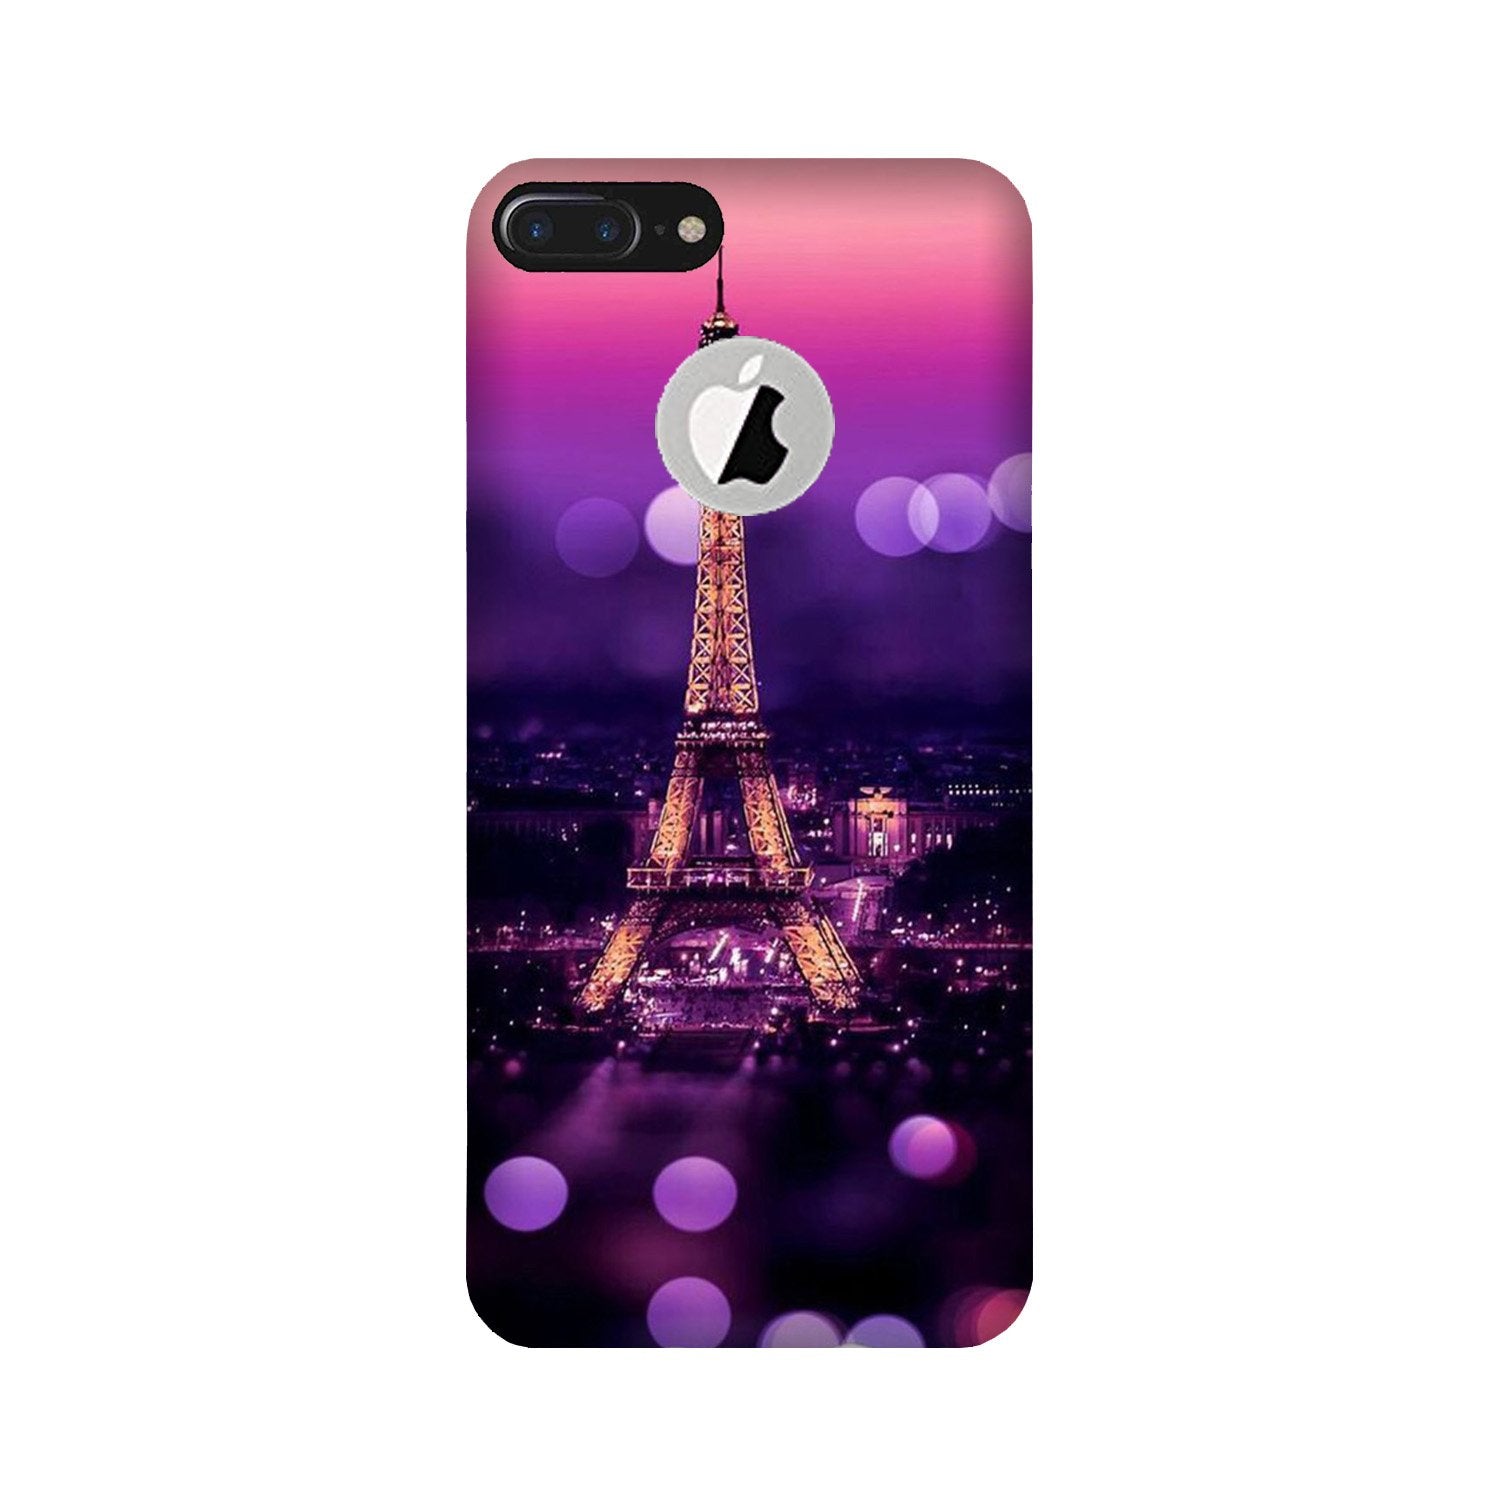 Eiffel Tower Case for iPhone 7 Plus logo cut